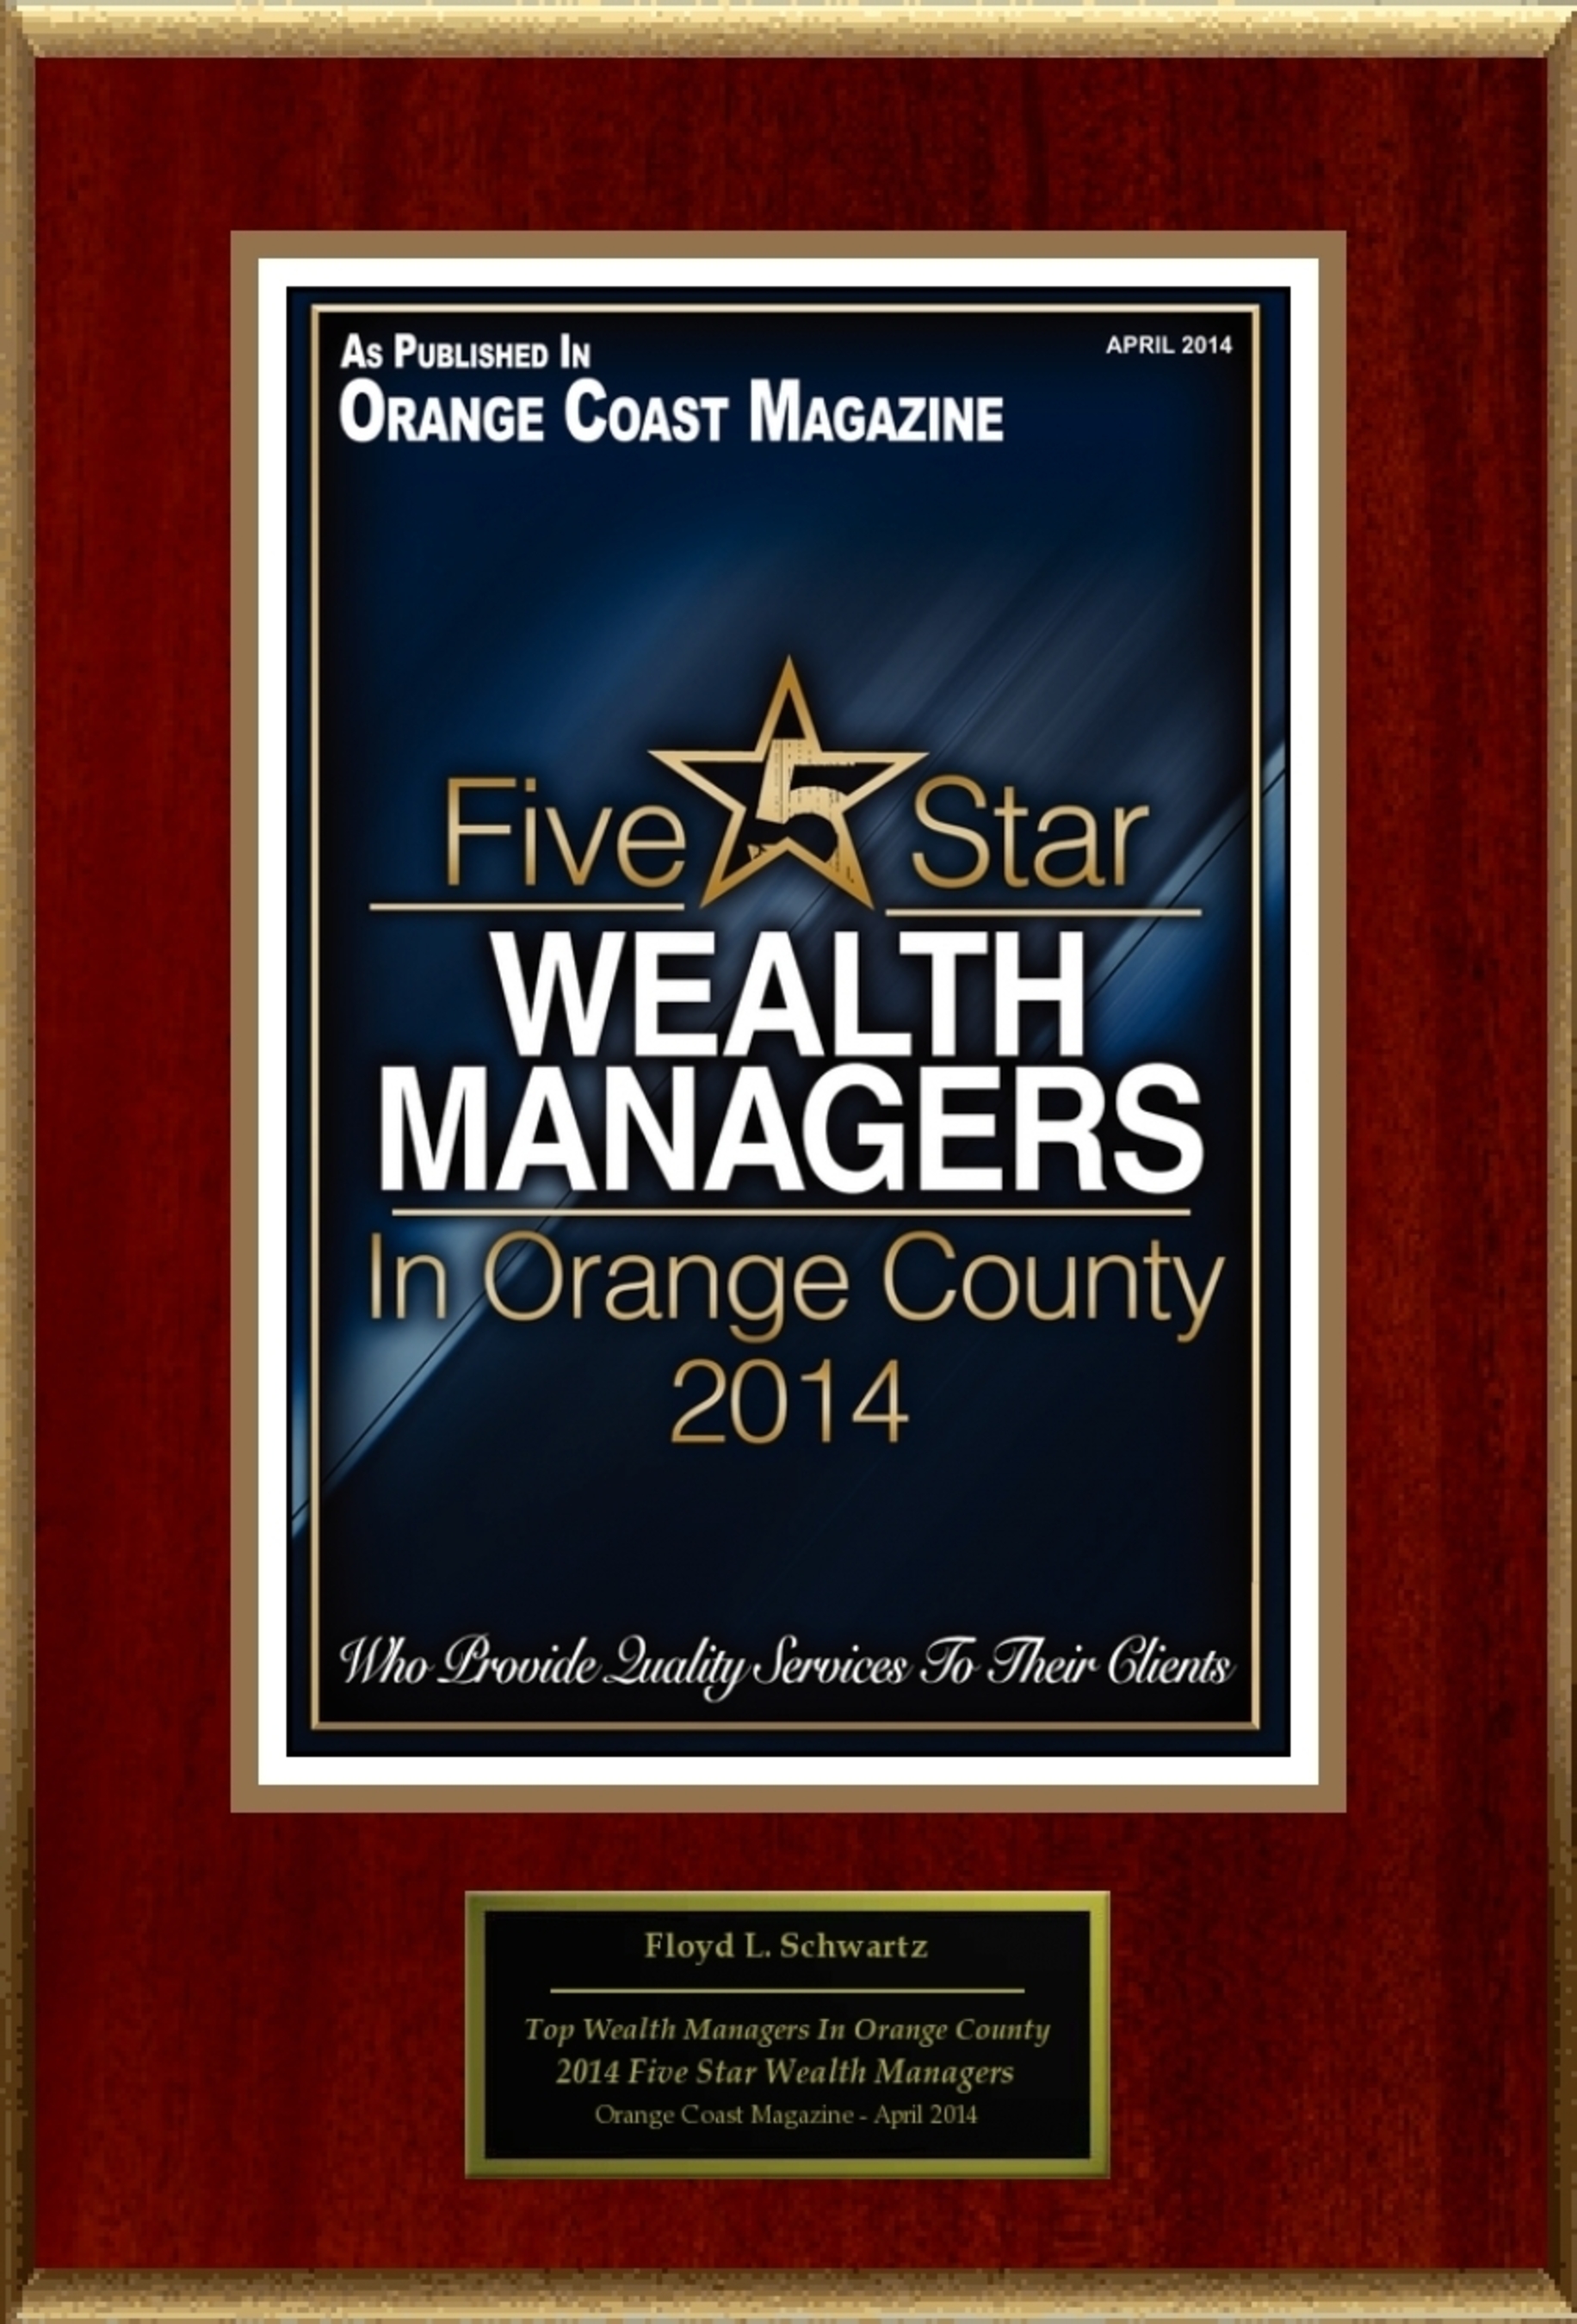 Floyd L. Schwartz Selected For "Top Wealth Managers In Orange County 2014" (PRNewsFoto/American Registry)